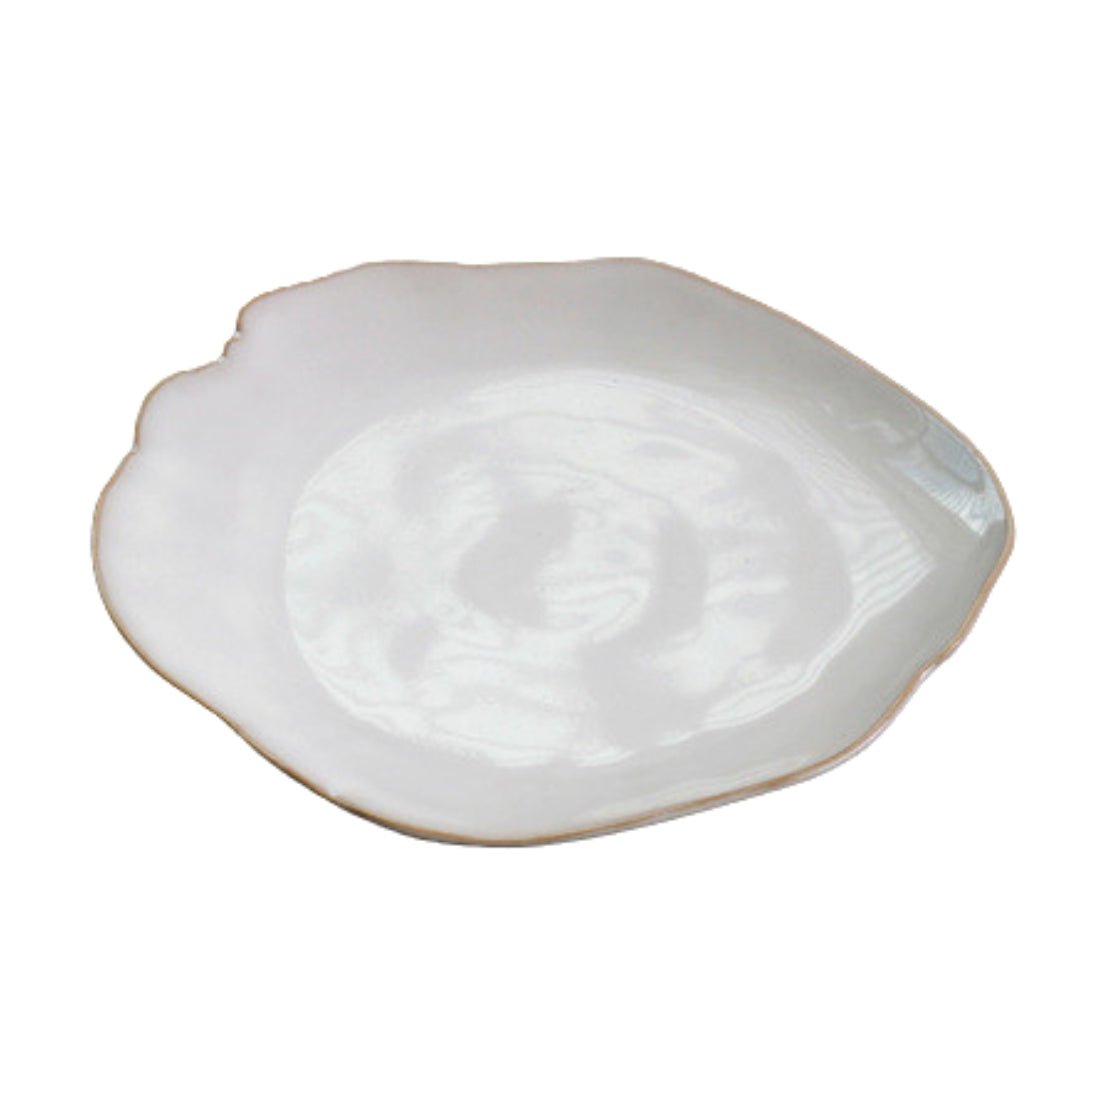 Asymmetrical white large plate